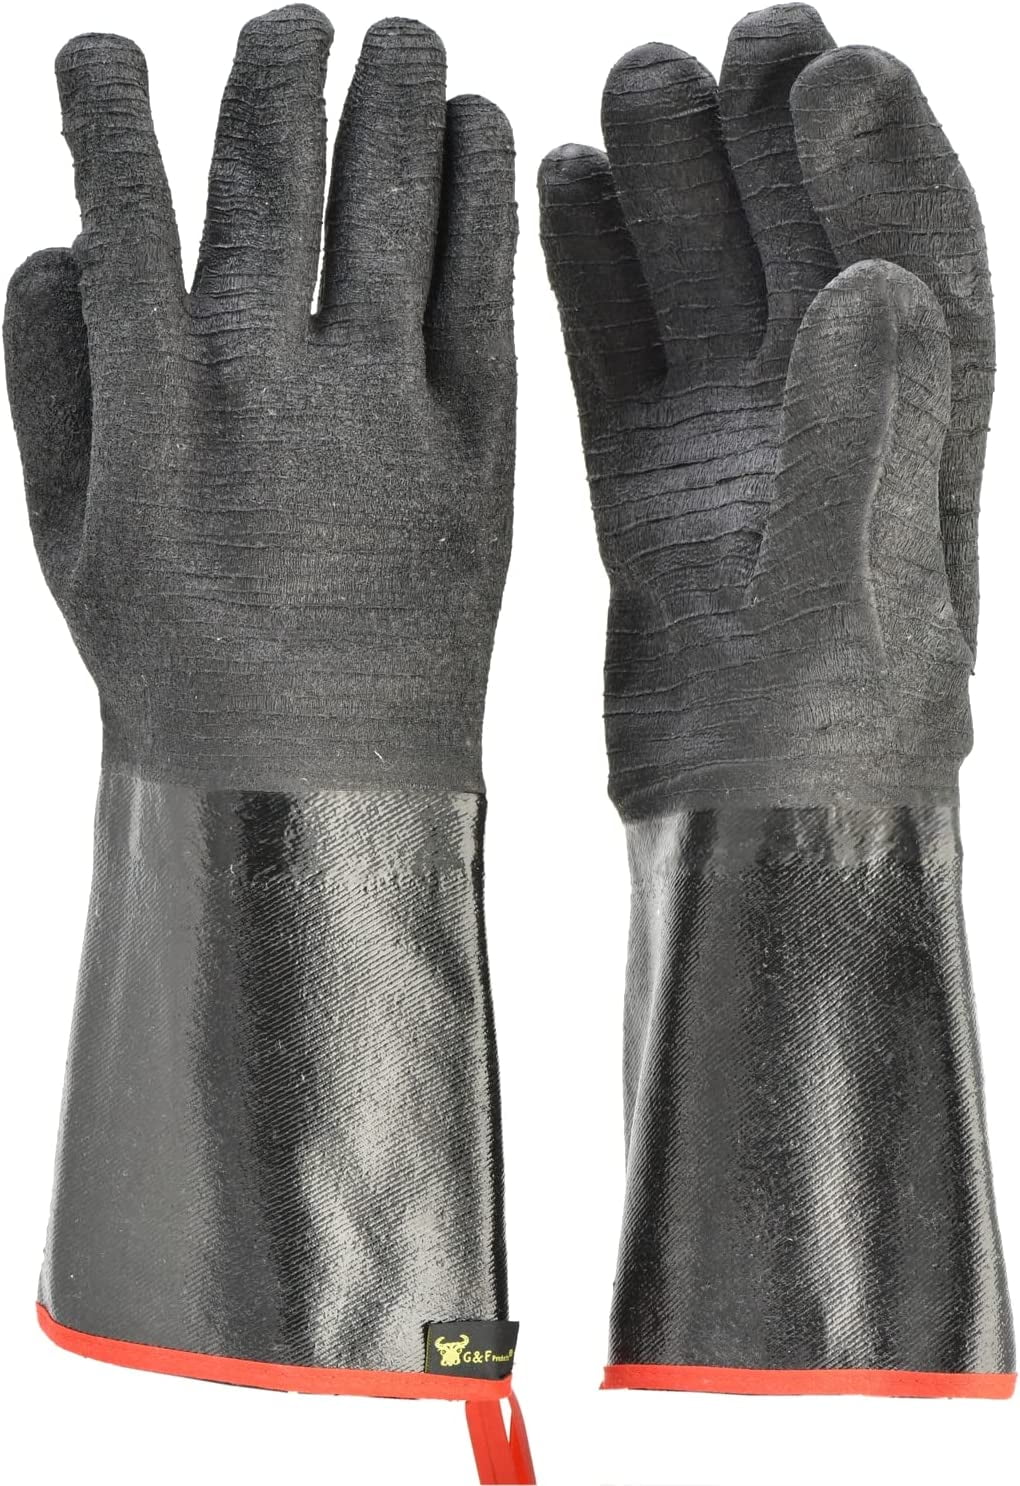 Heldig Oven Gloves 1472°F Heat Resistant Gloves, Cut-Resistant